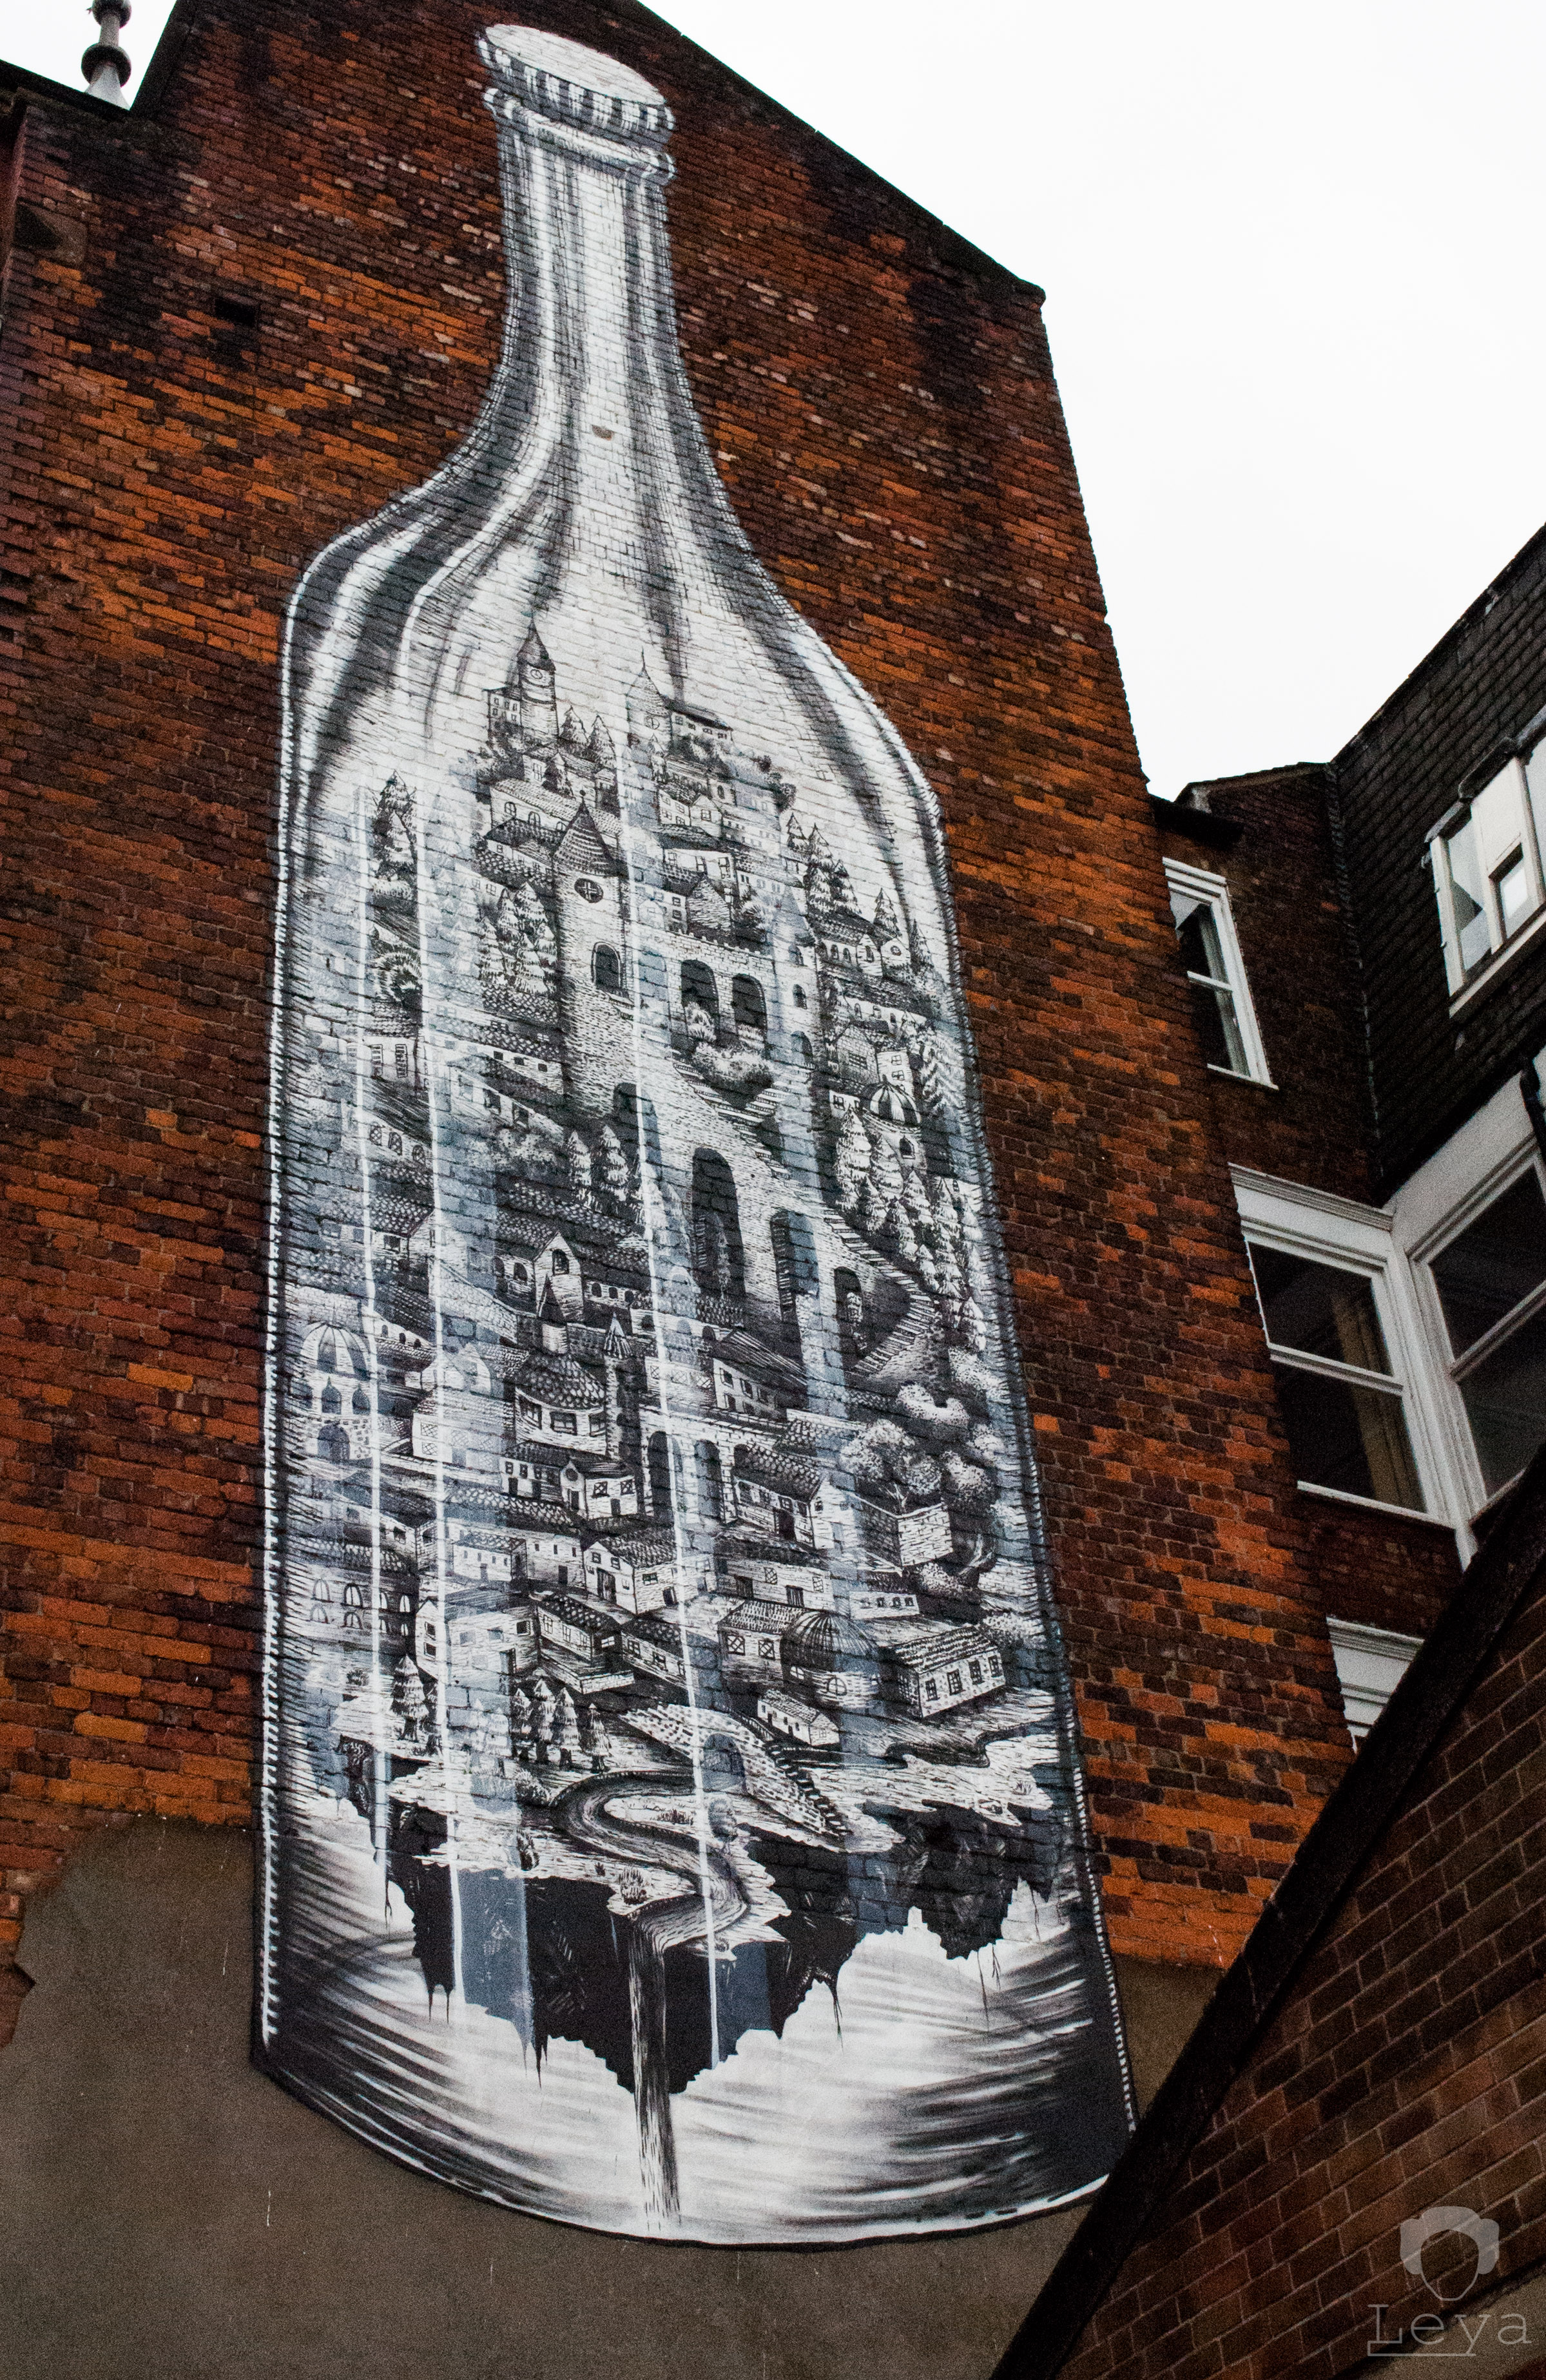 Phlegm, Manchester in a bottle